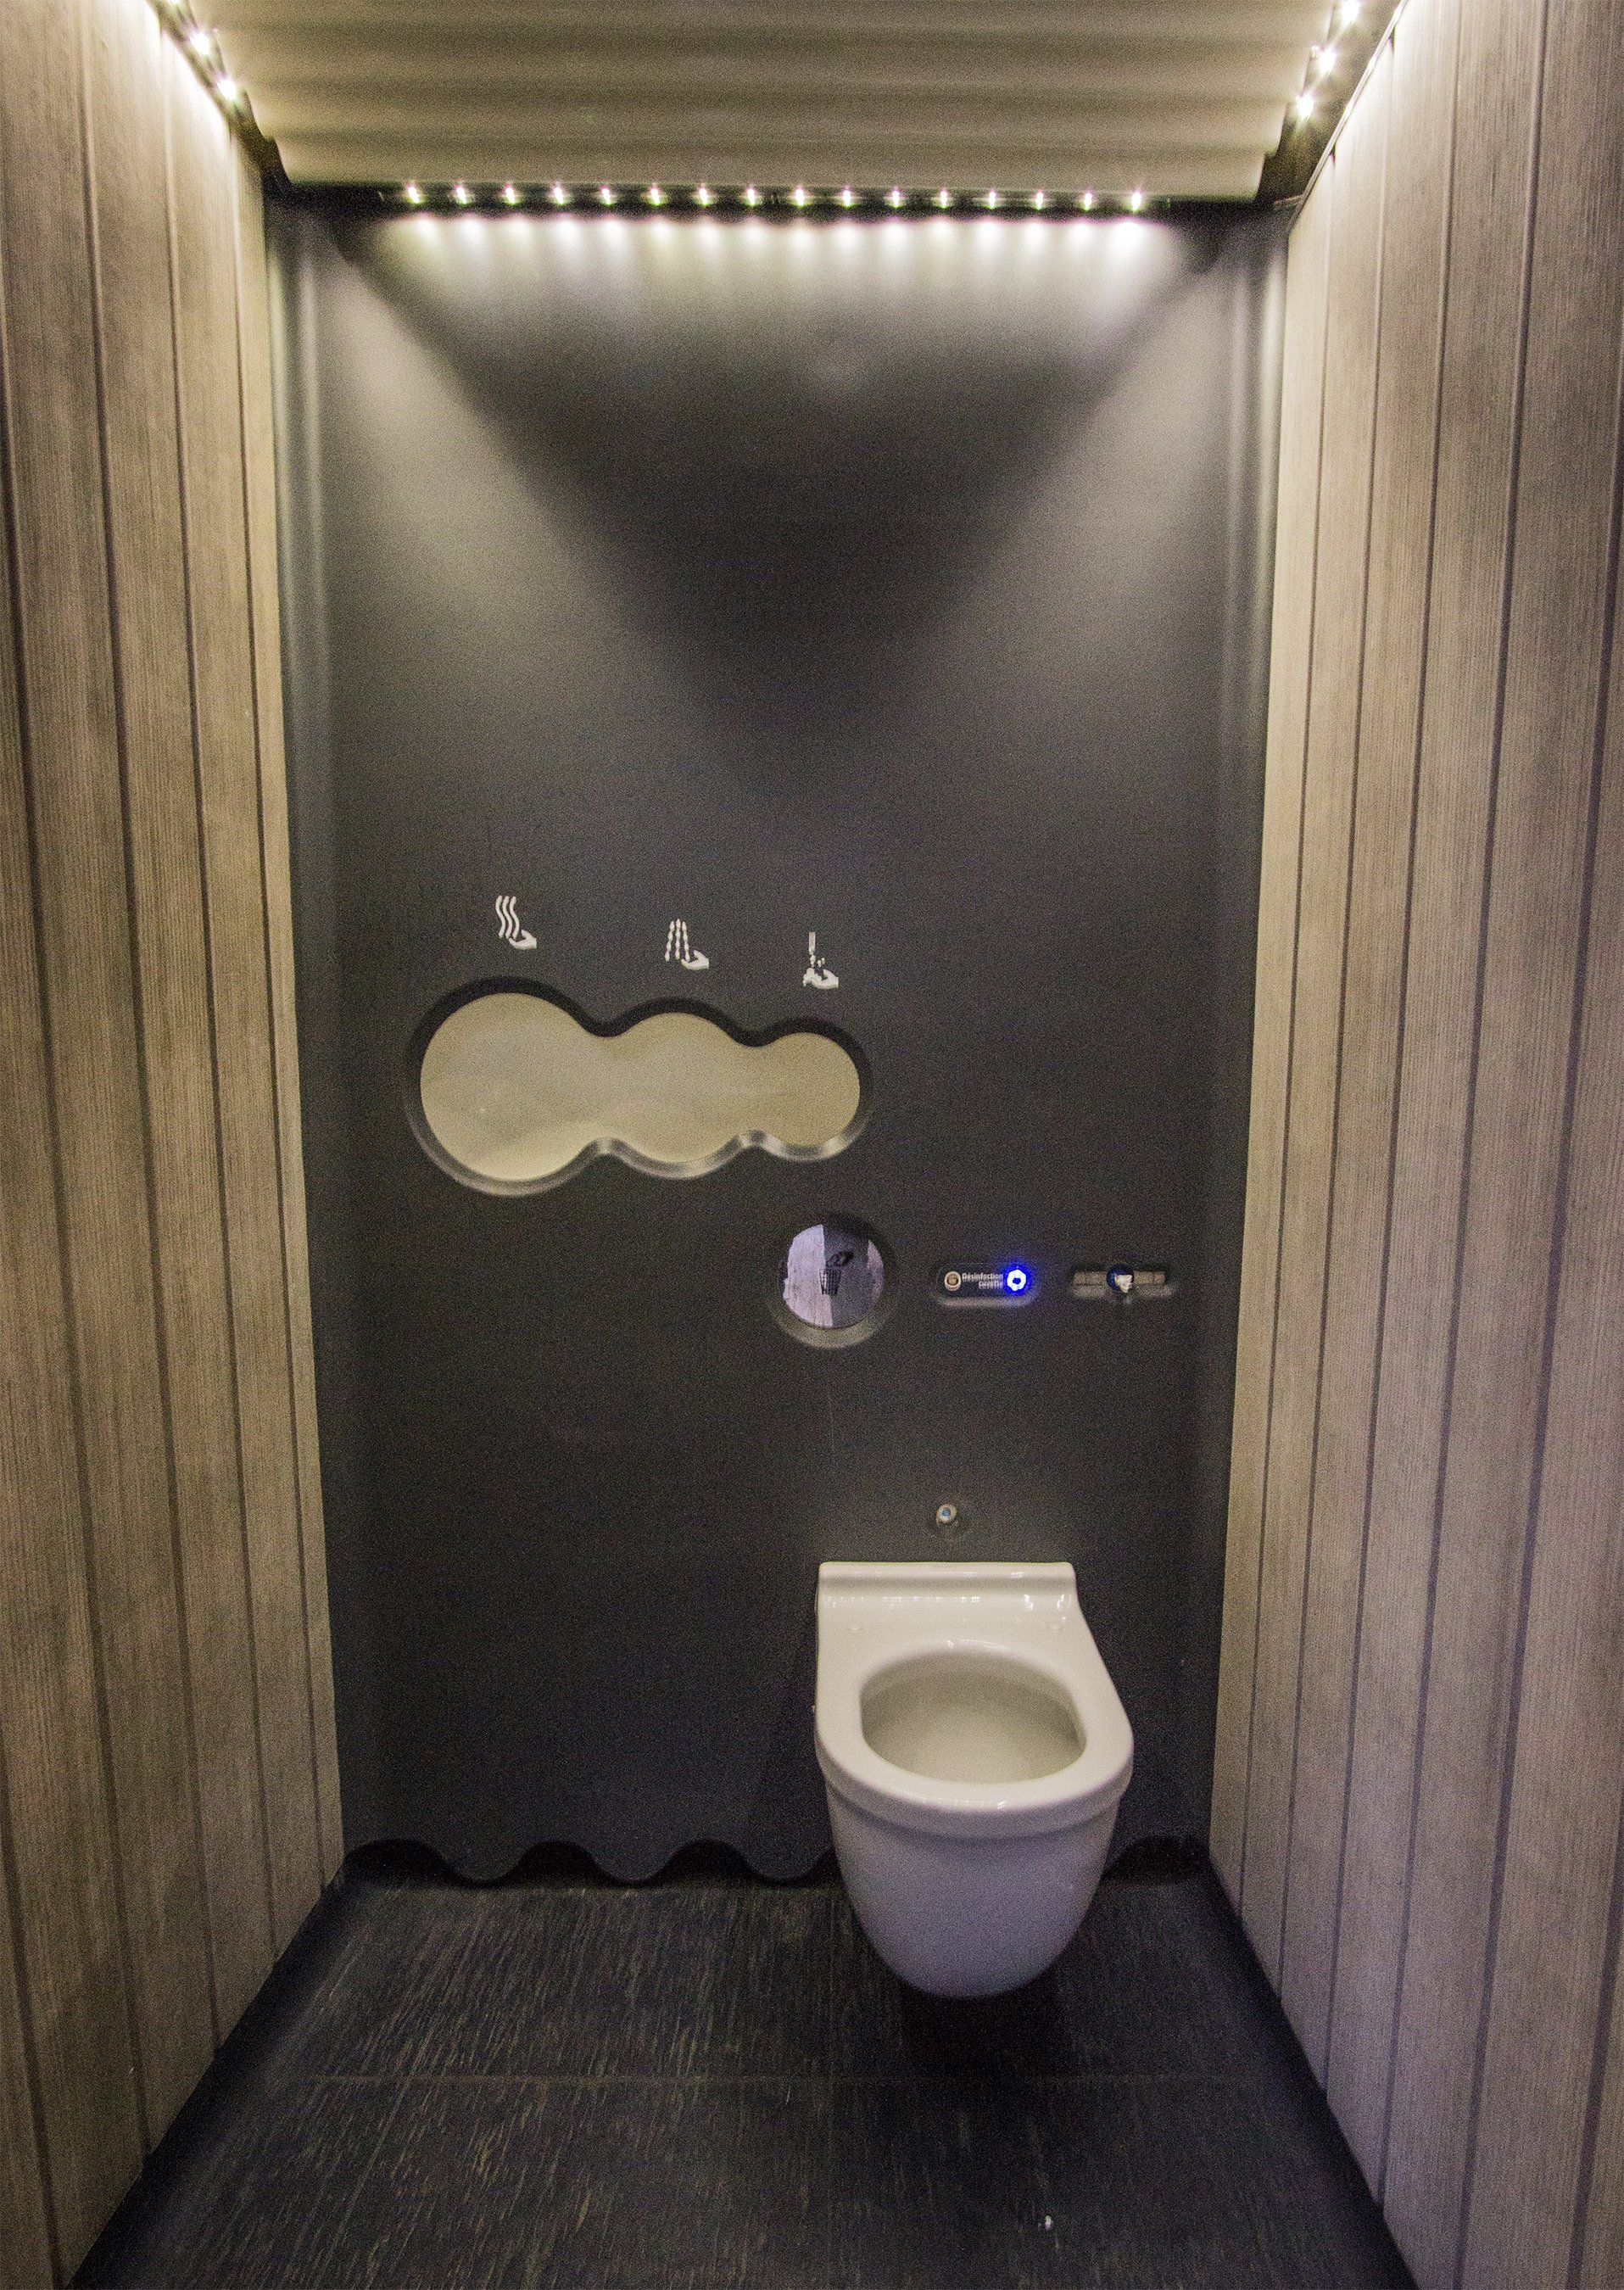 gloryhole in toilet stall xxx porn video pic